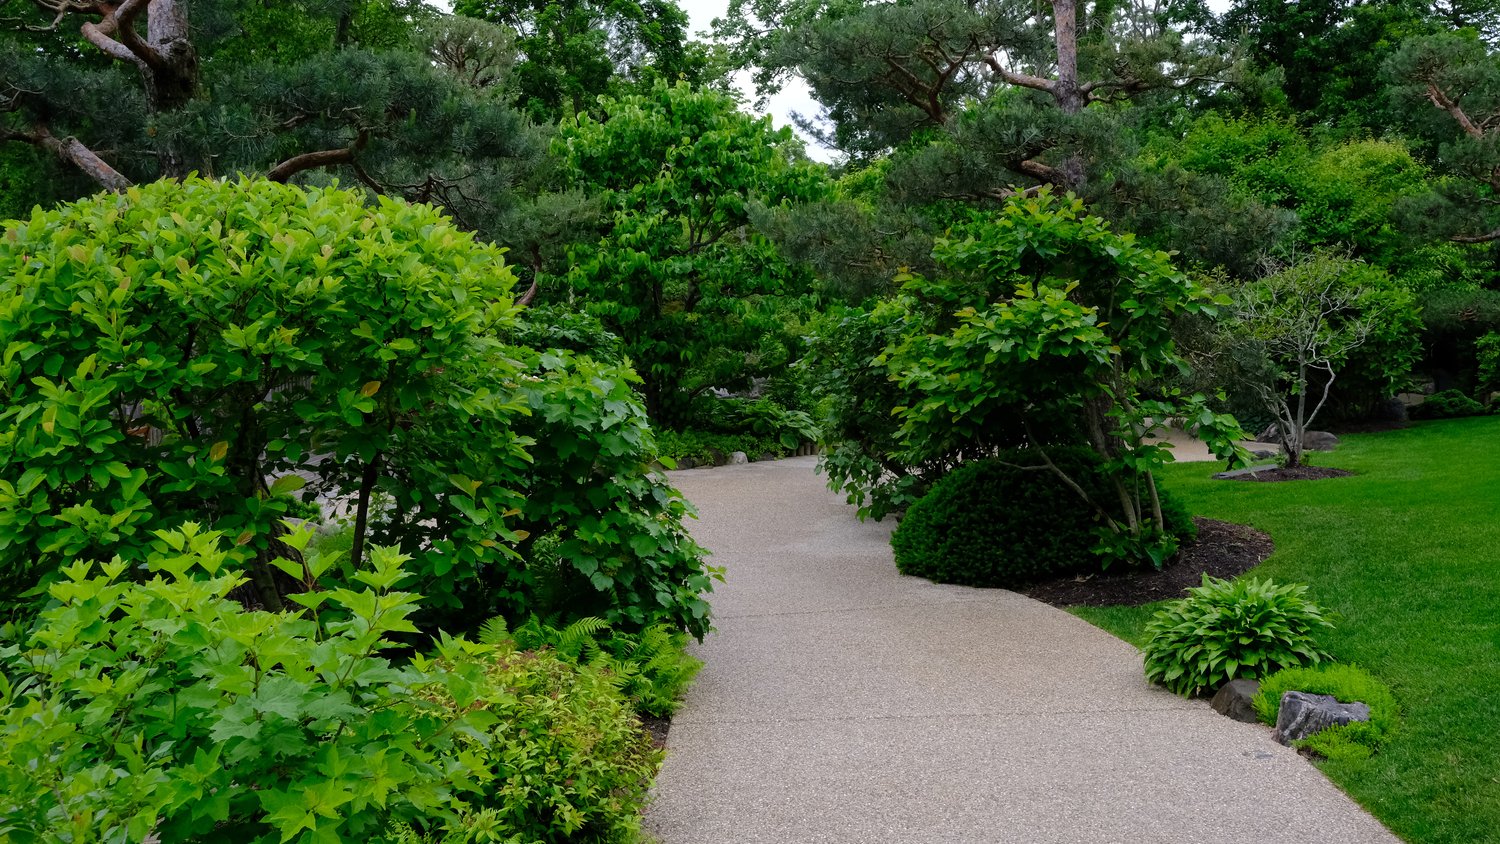 Wide open pathway through the gardens.